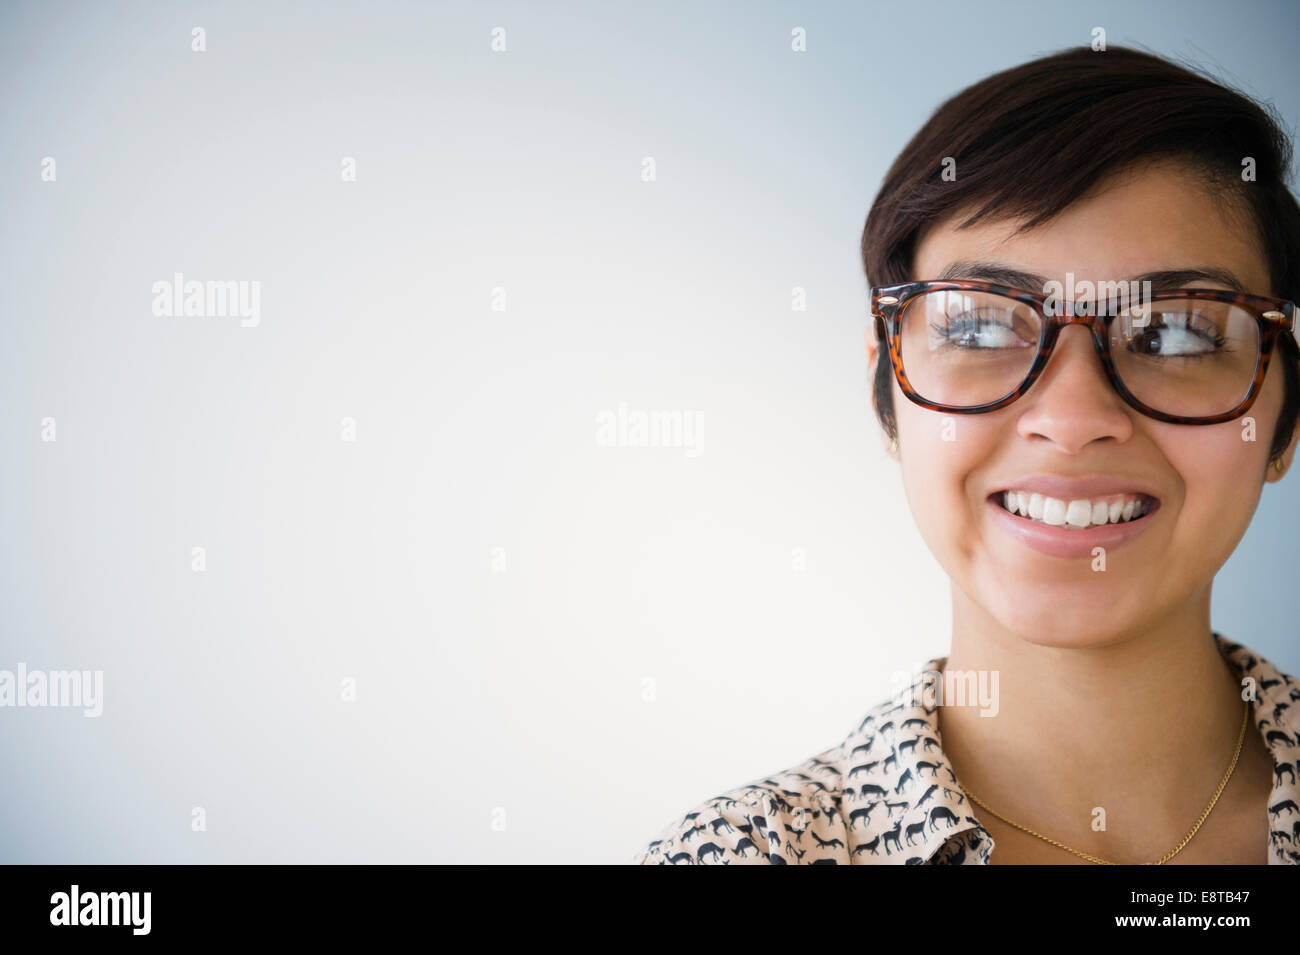 Smiling mixed race woman wearing eyeglasses Stock Photo